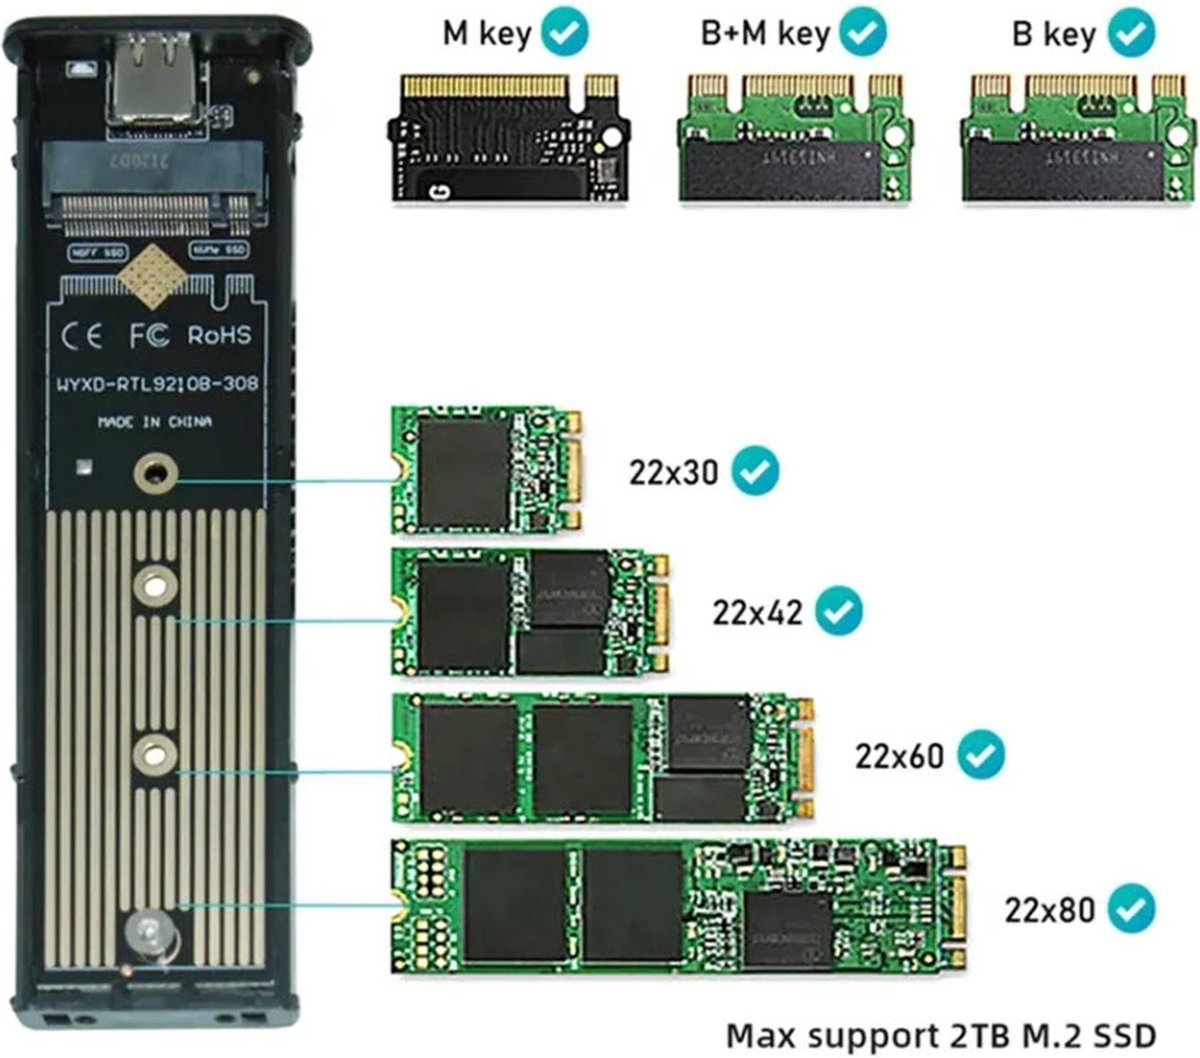 M2 SSD Case NVMe Enclosure M.2 to USB 3.1 SSD Adapter - M.2 SSD-behuizing NVMe - M.2 naar USB 3.1 SSD-adapter voor NVMe PCIe NGFF SATA M/B Key 2230/2242/2260/2280 RTL9210B Dual Protocol SATA NVMe NGFF SSD behuizing